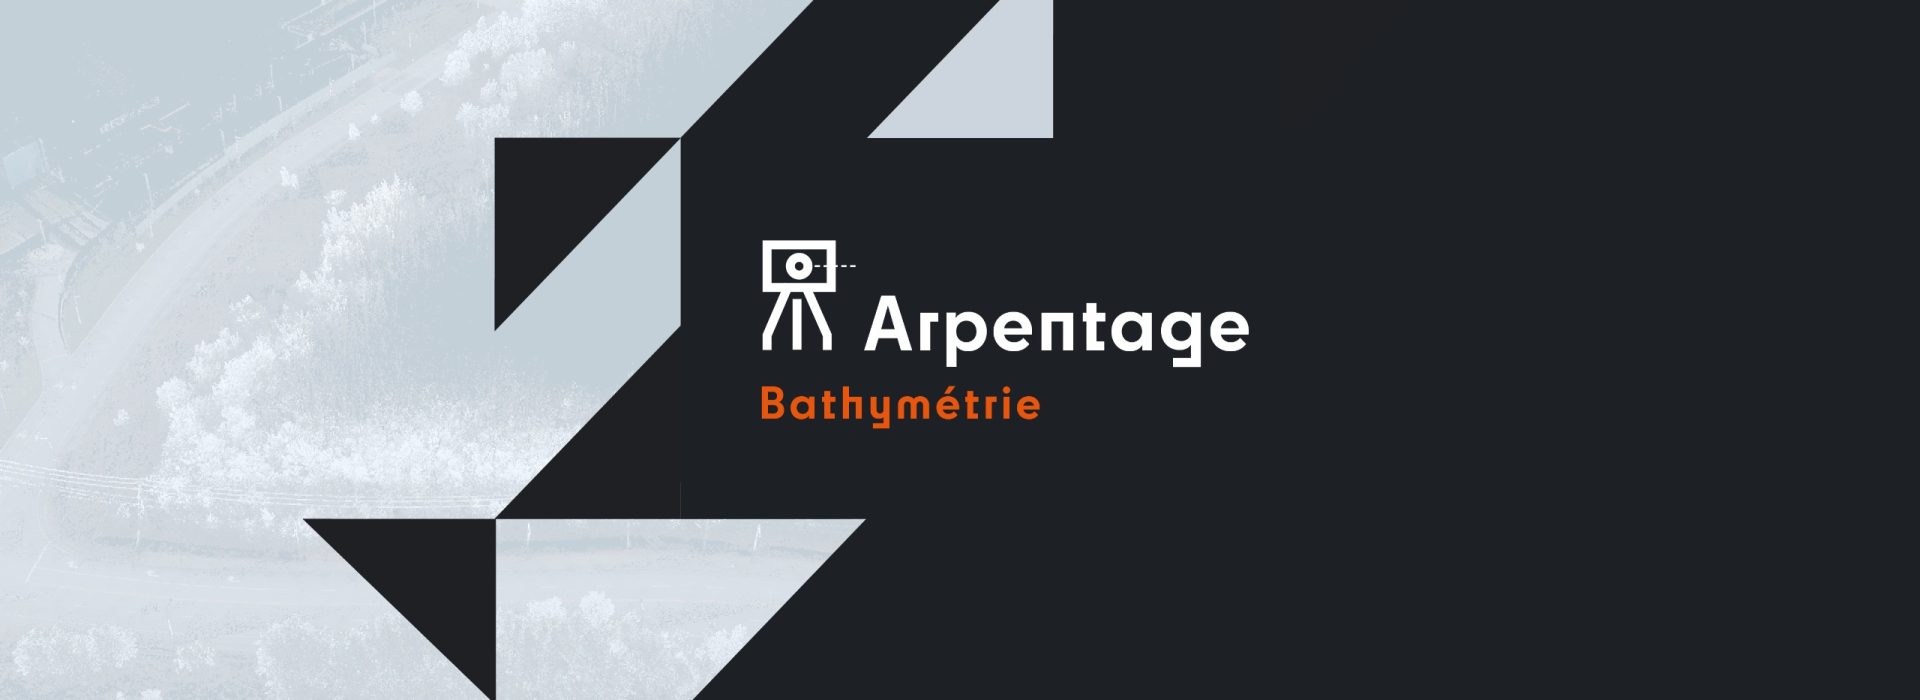 Arpentage - Bathymétrie